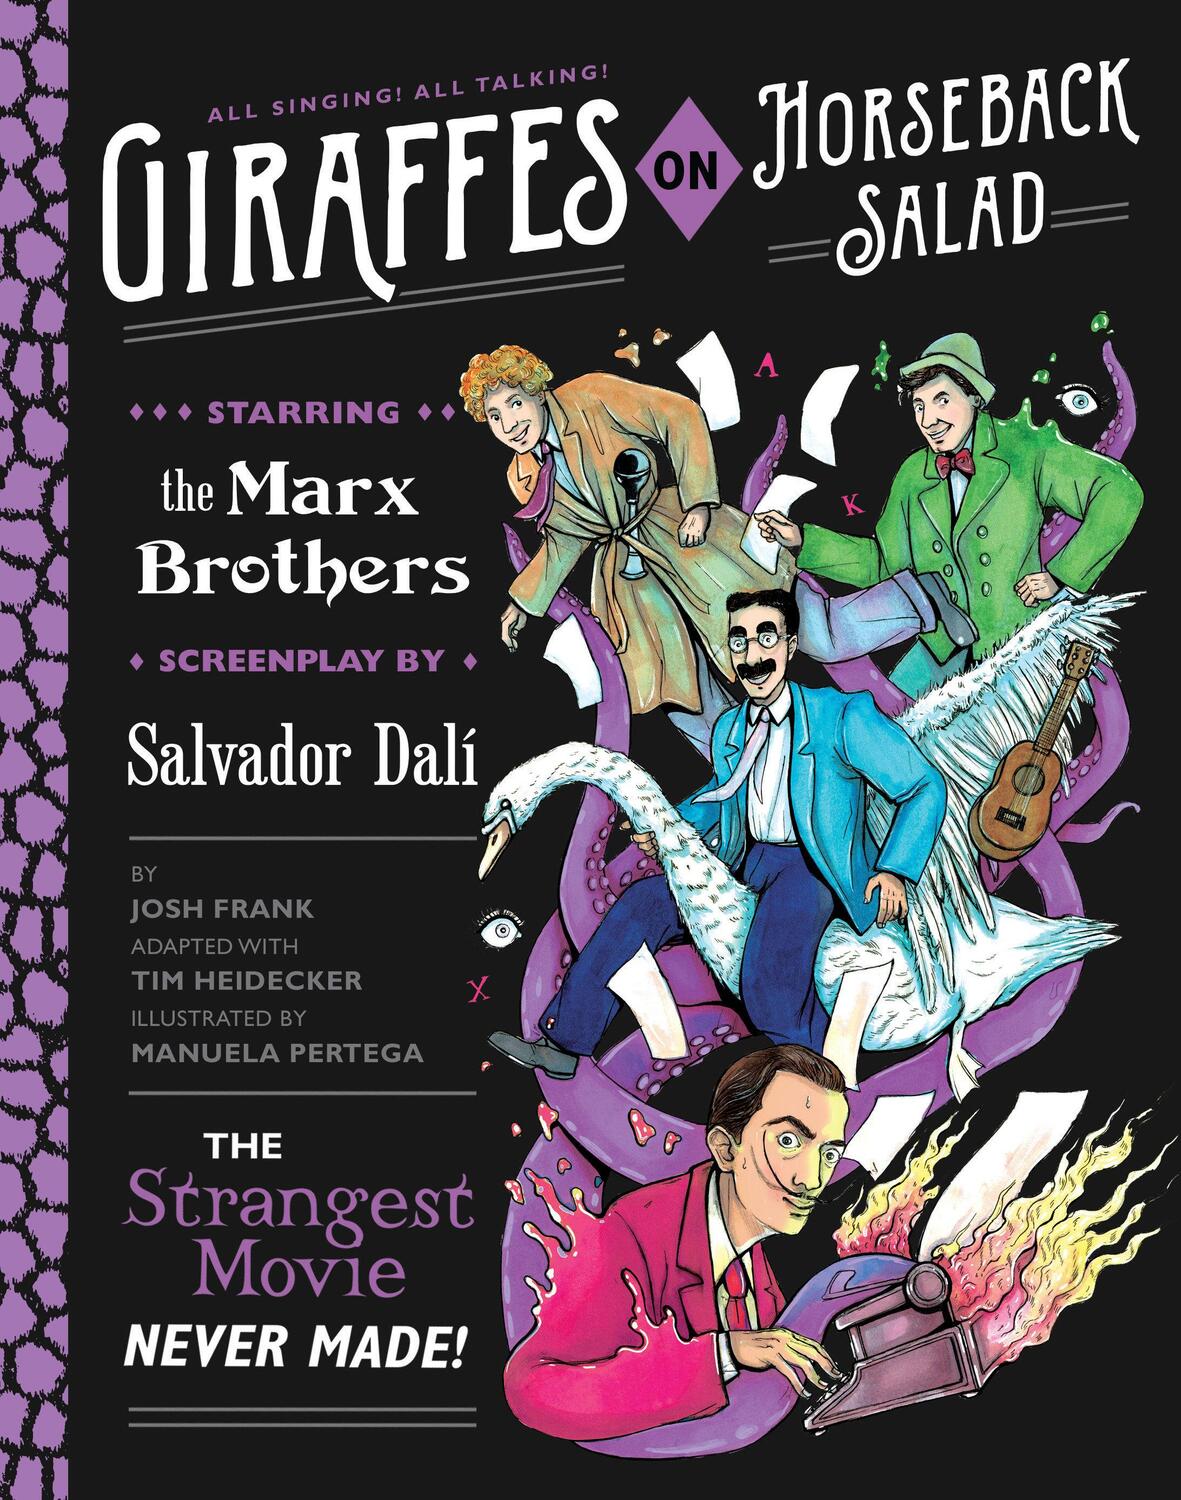 Cover: 9781594749230 | Giraffes on Horseback Salad: Salvador Dali, the Marx Brothers, and...